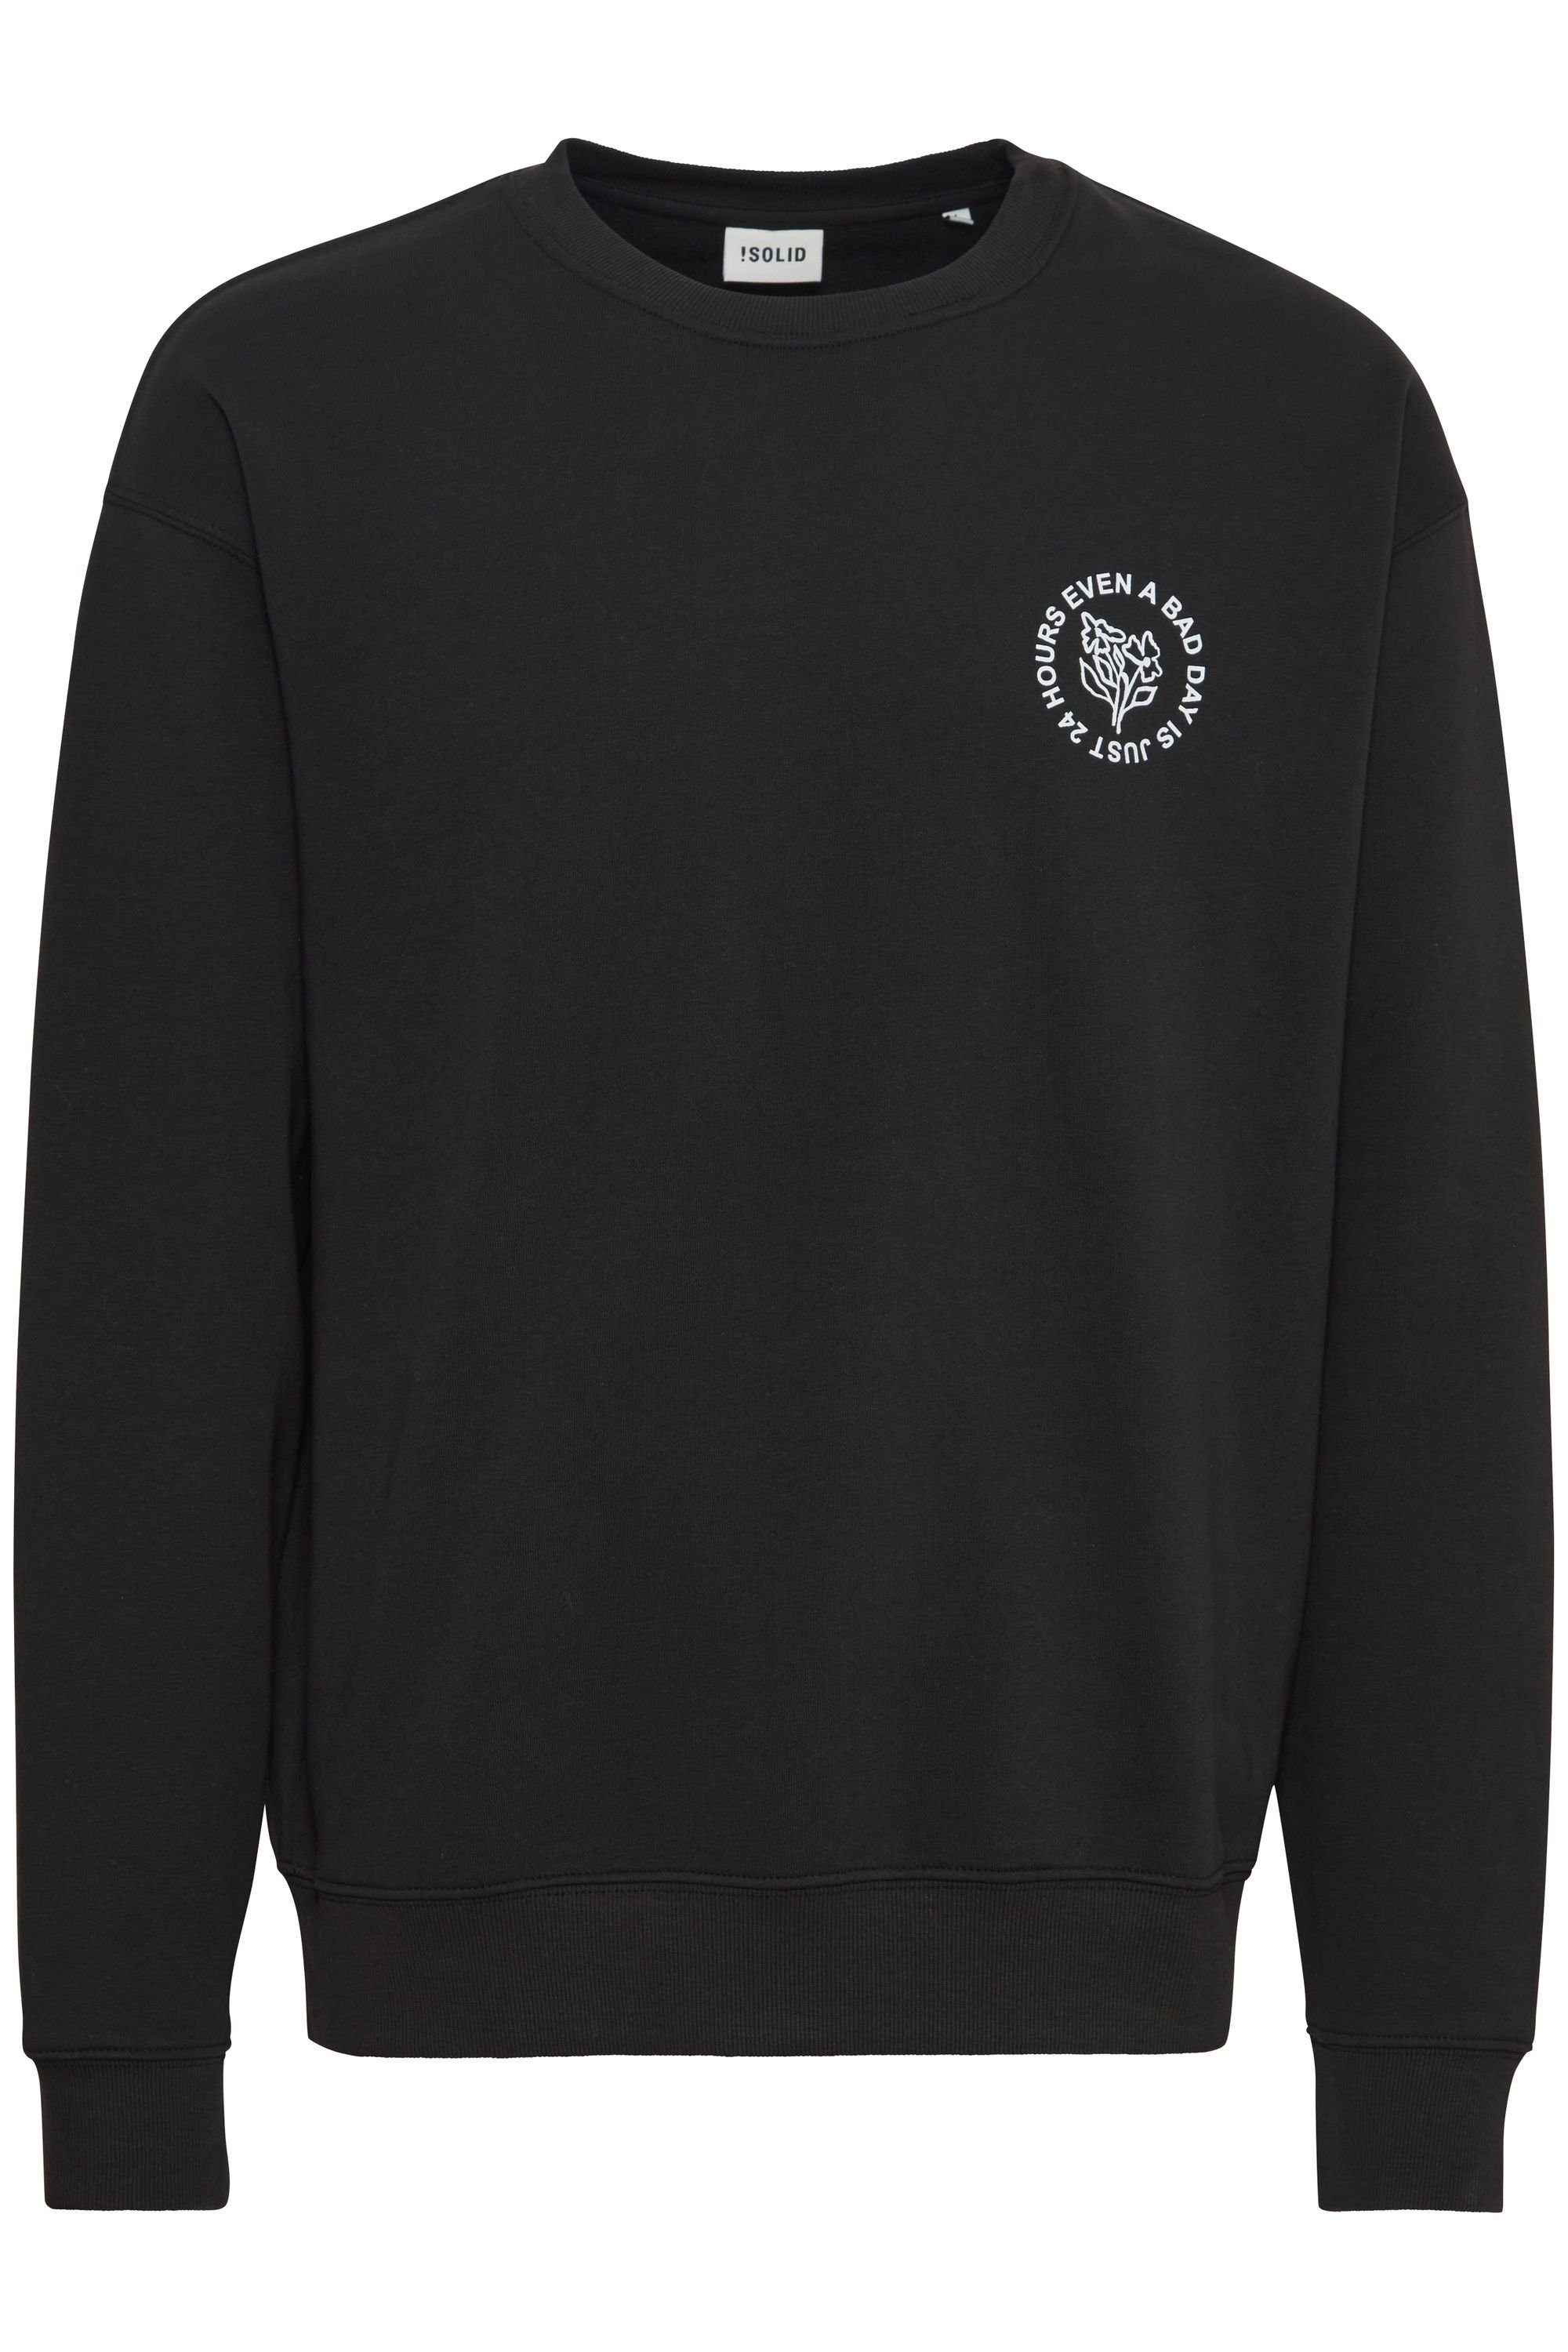 (194008) - Sweatshirt Black !Solid True SDGaius 21107854